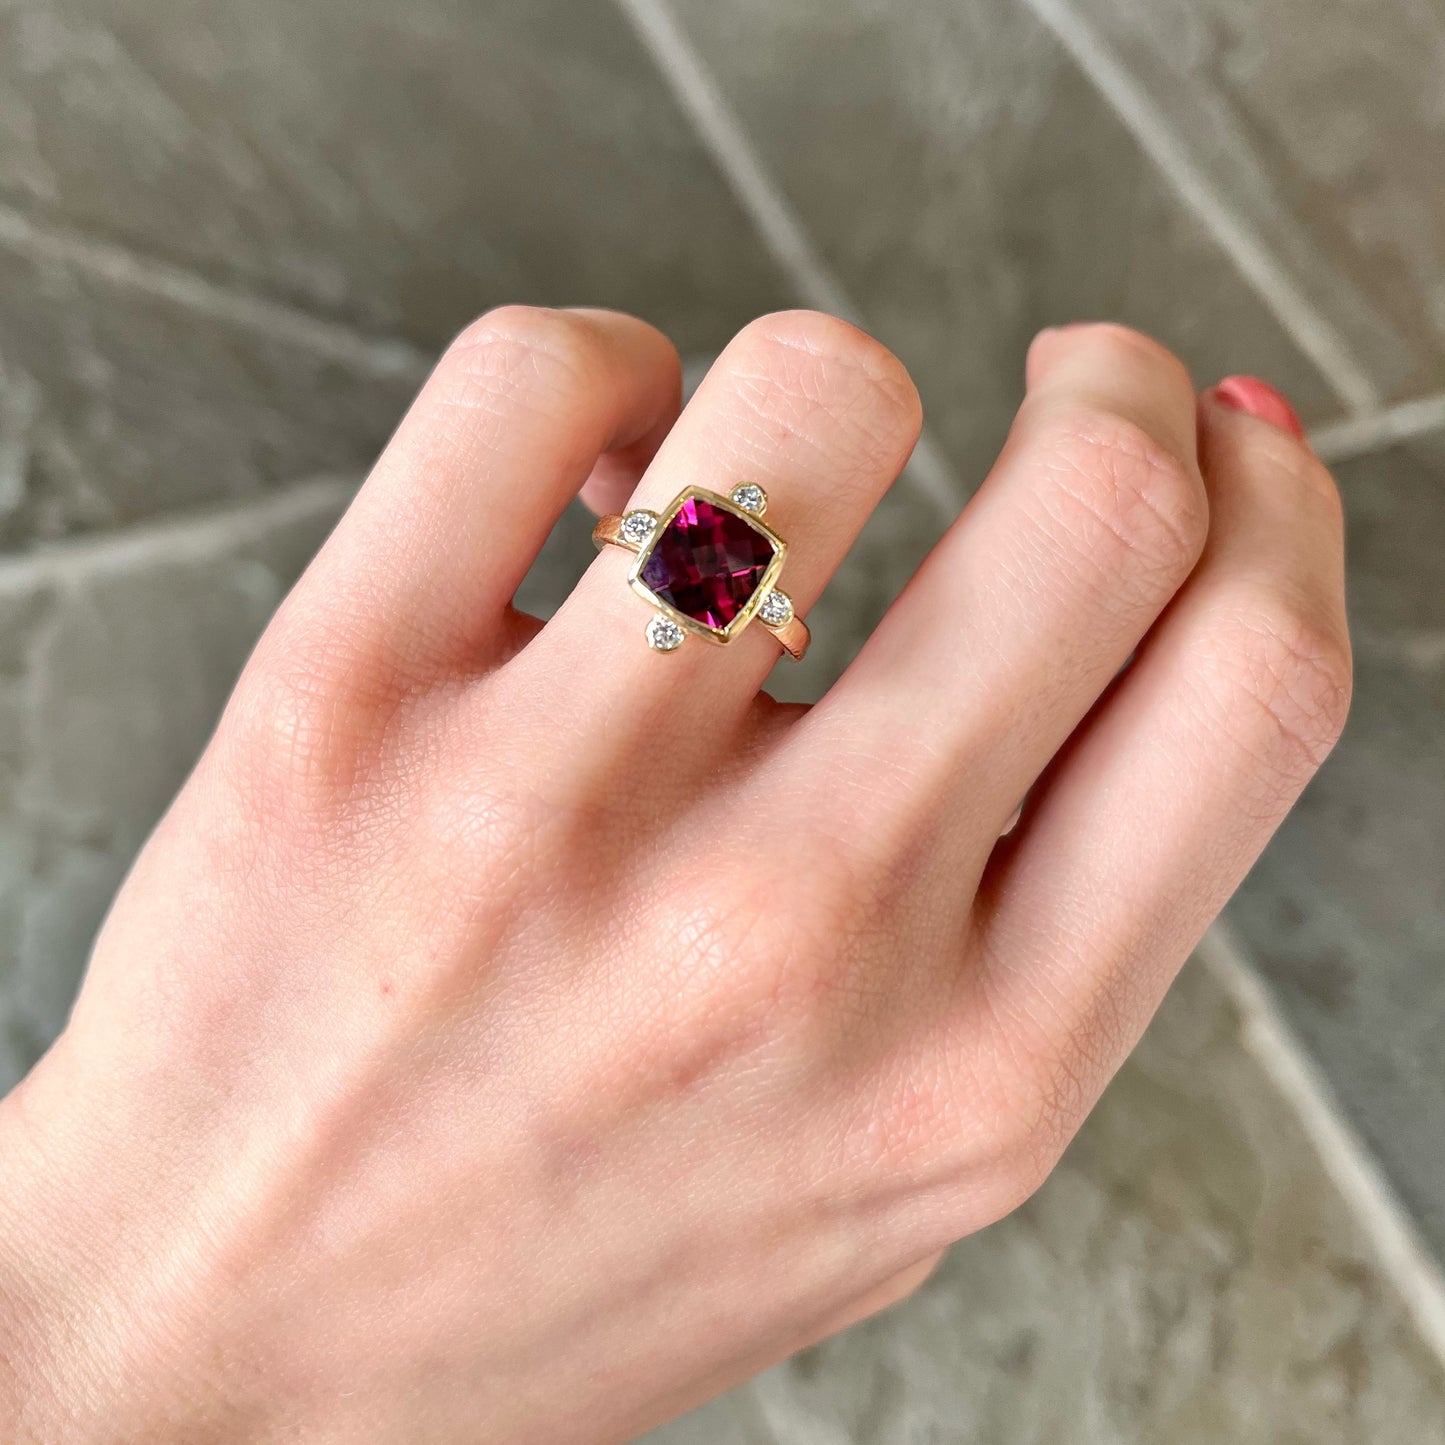 Rhodolite Garnet with Diamonds Ring